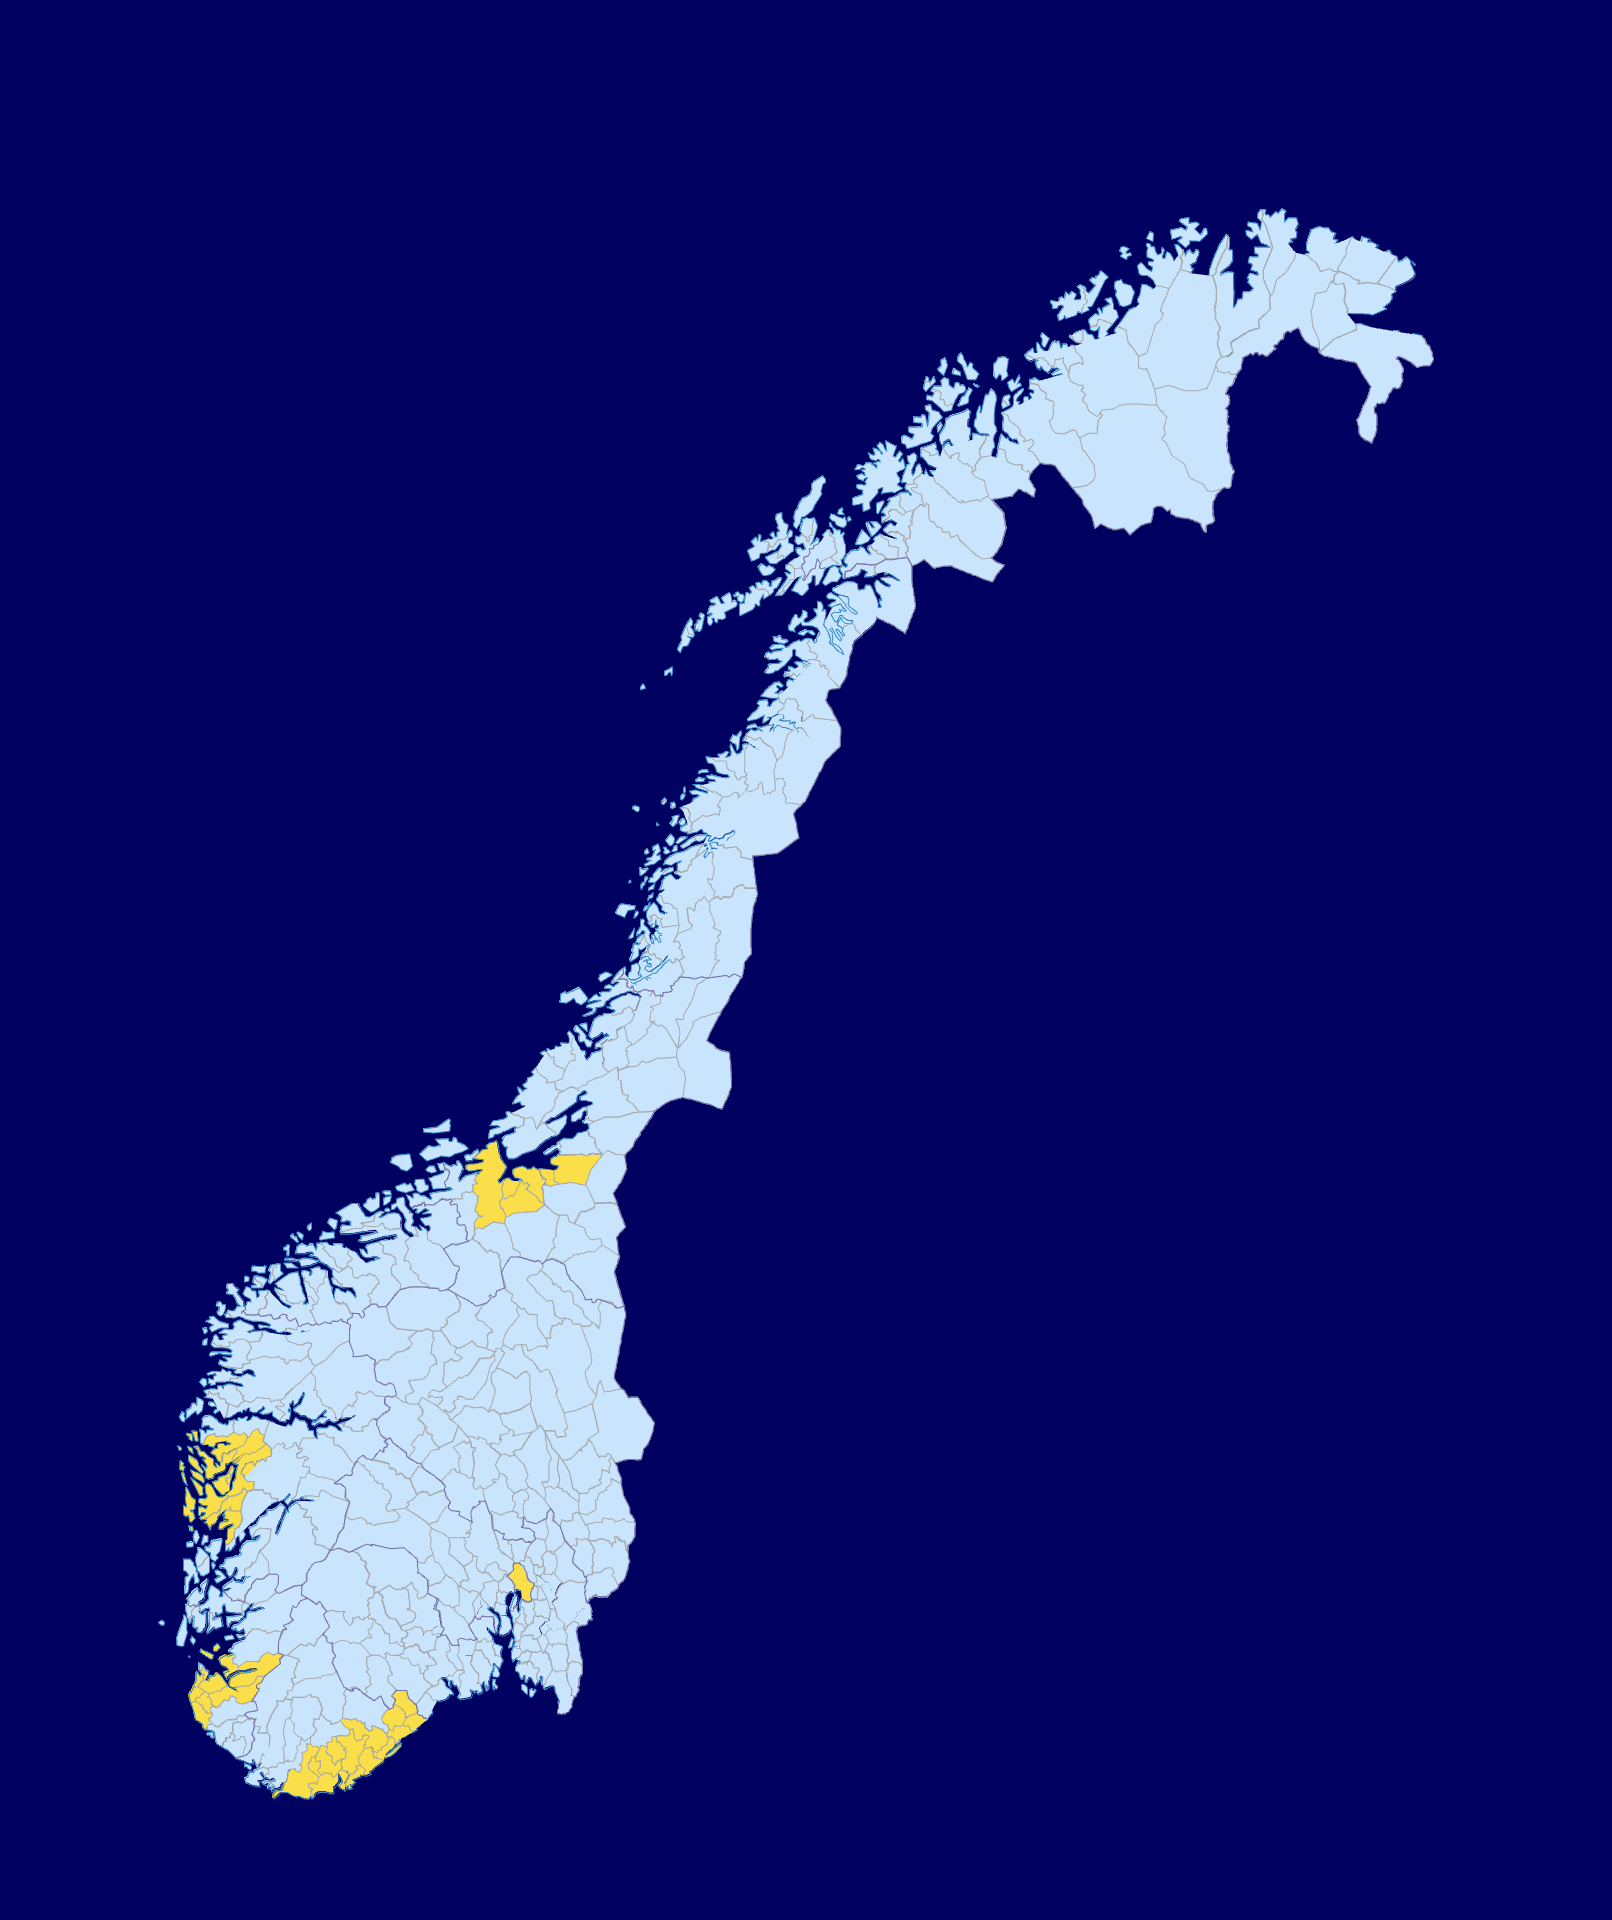 Kart over Norges kommuner, med kommunene som deltar i MiNS-studien markert med gul farge.